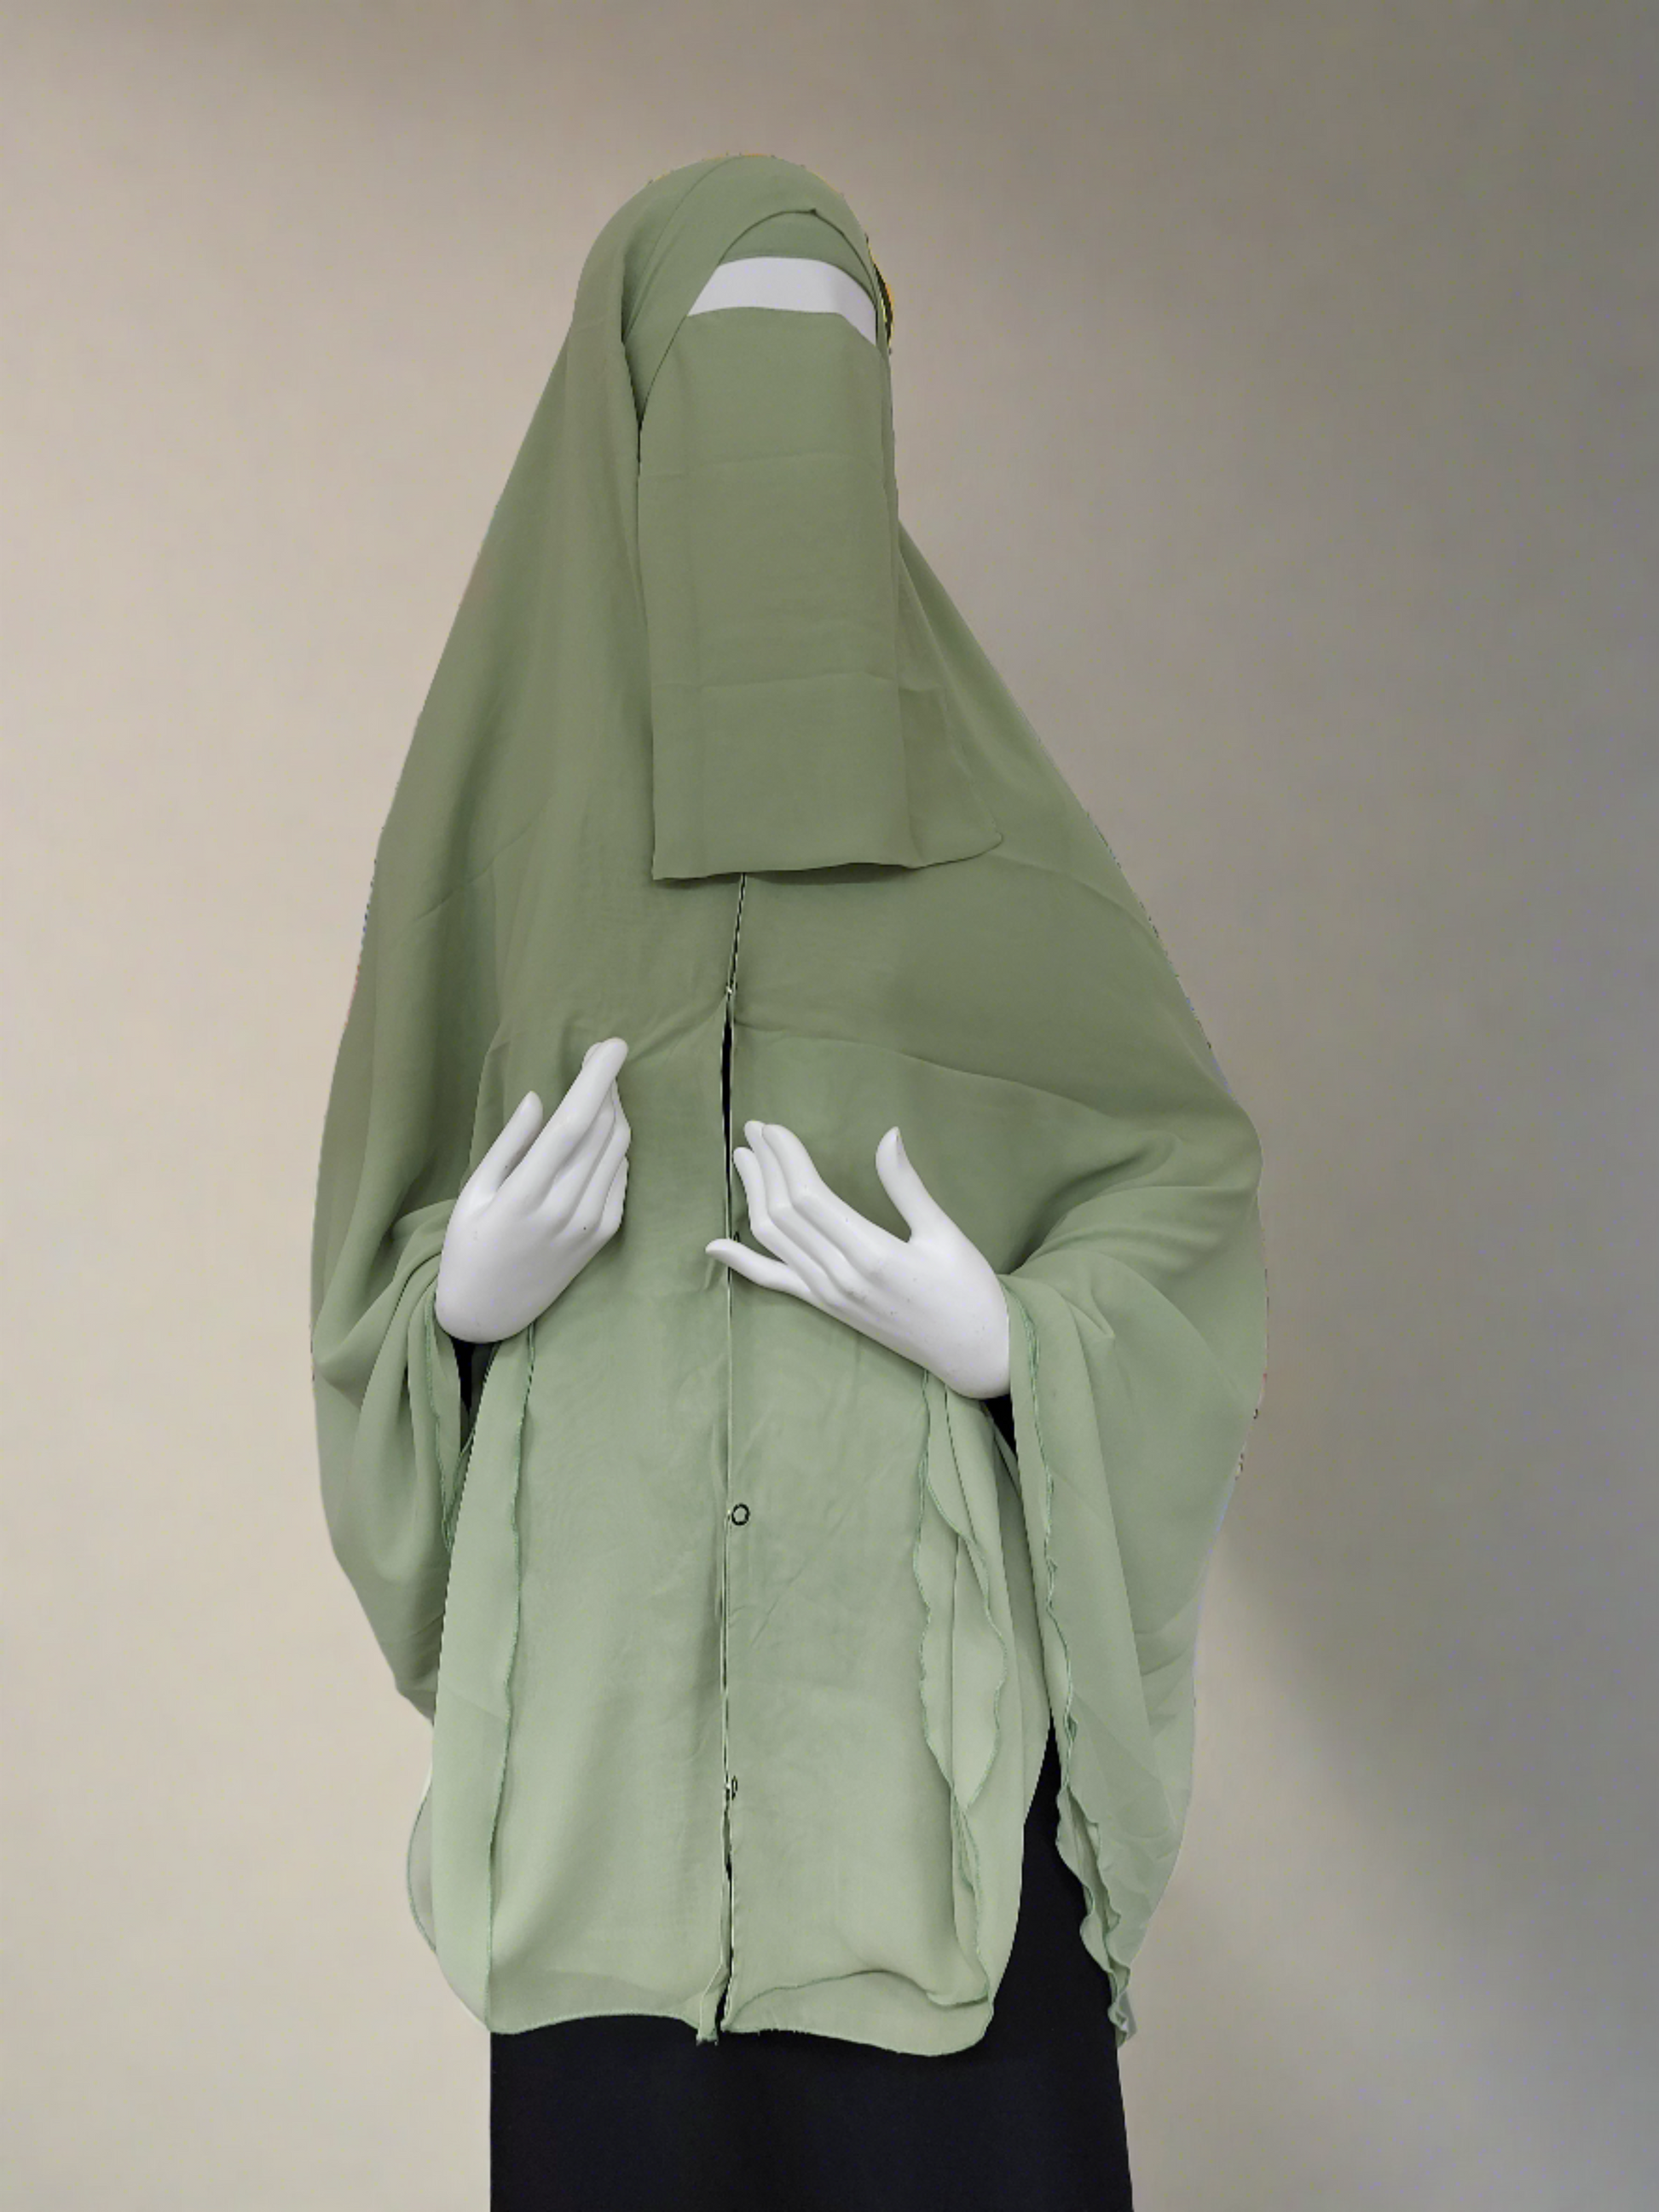 Chiffon jilbab with matching niqab